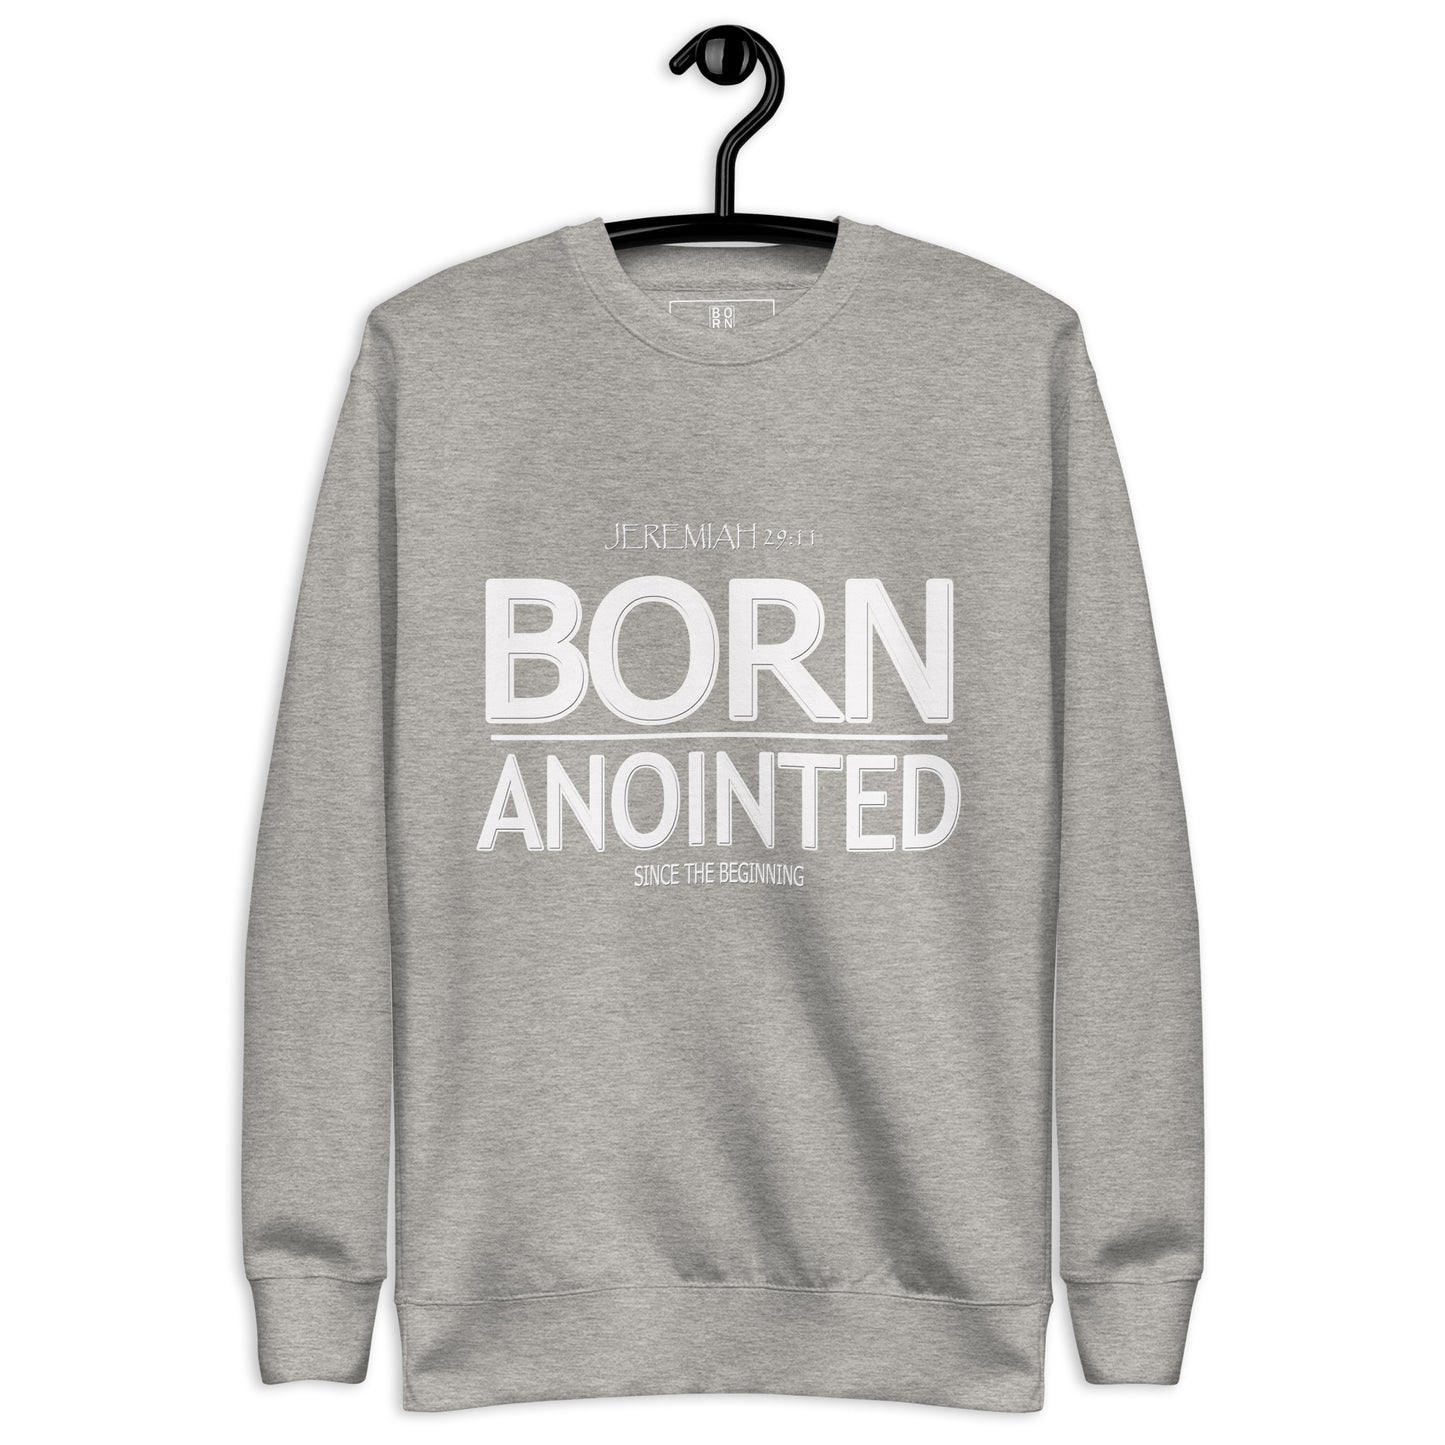 Born Anointed "Jeremiah 29:11" Unisex Premium Sweatshirt